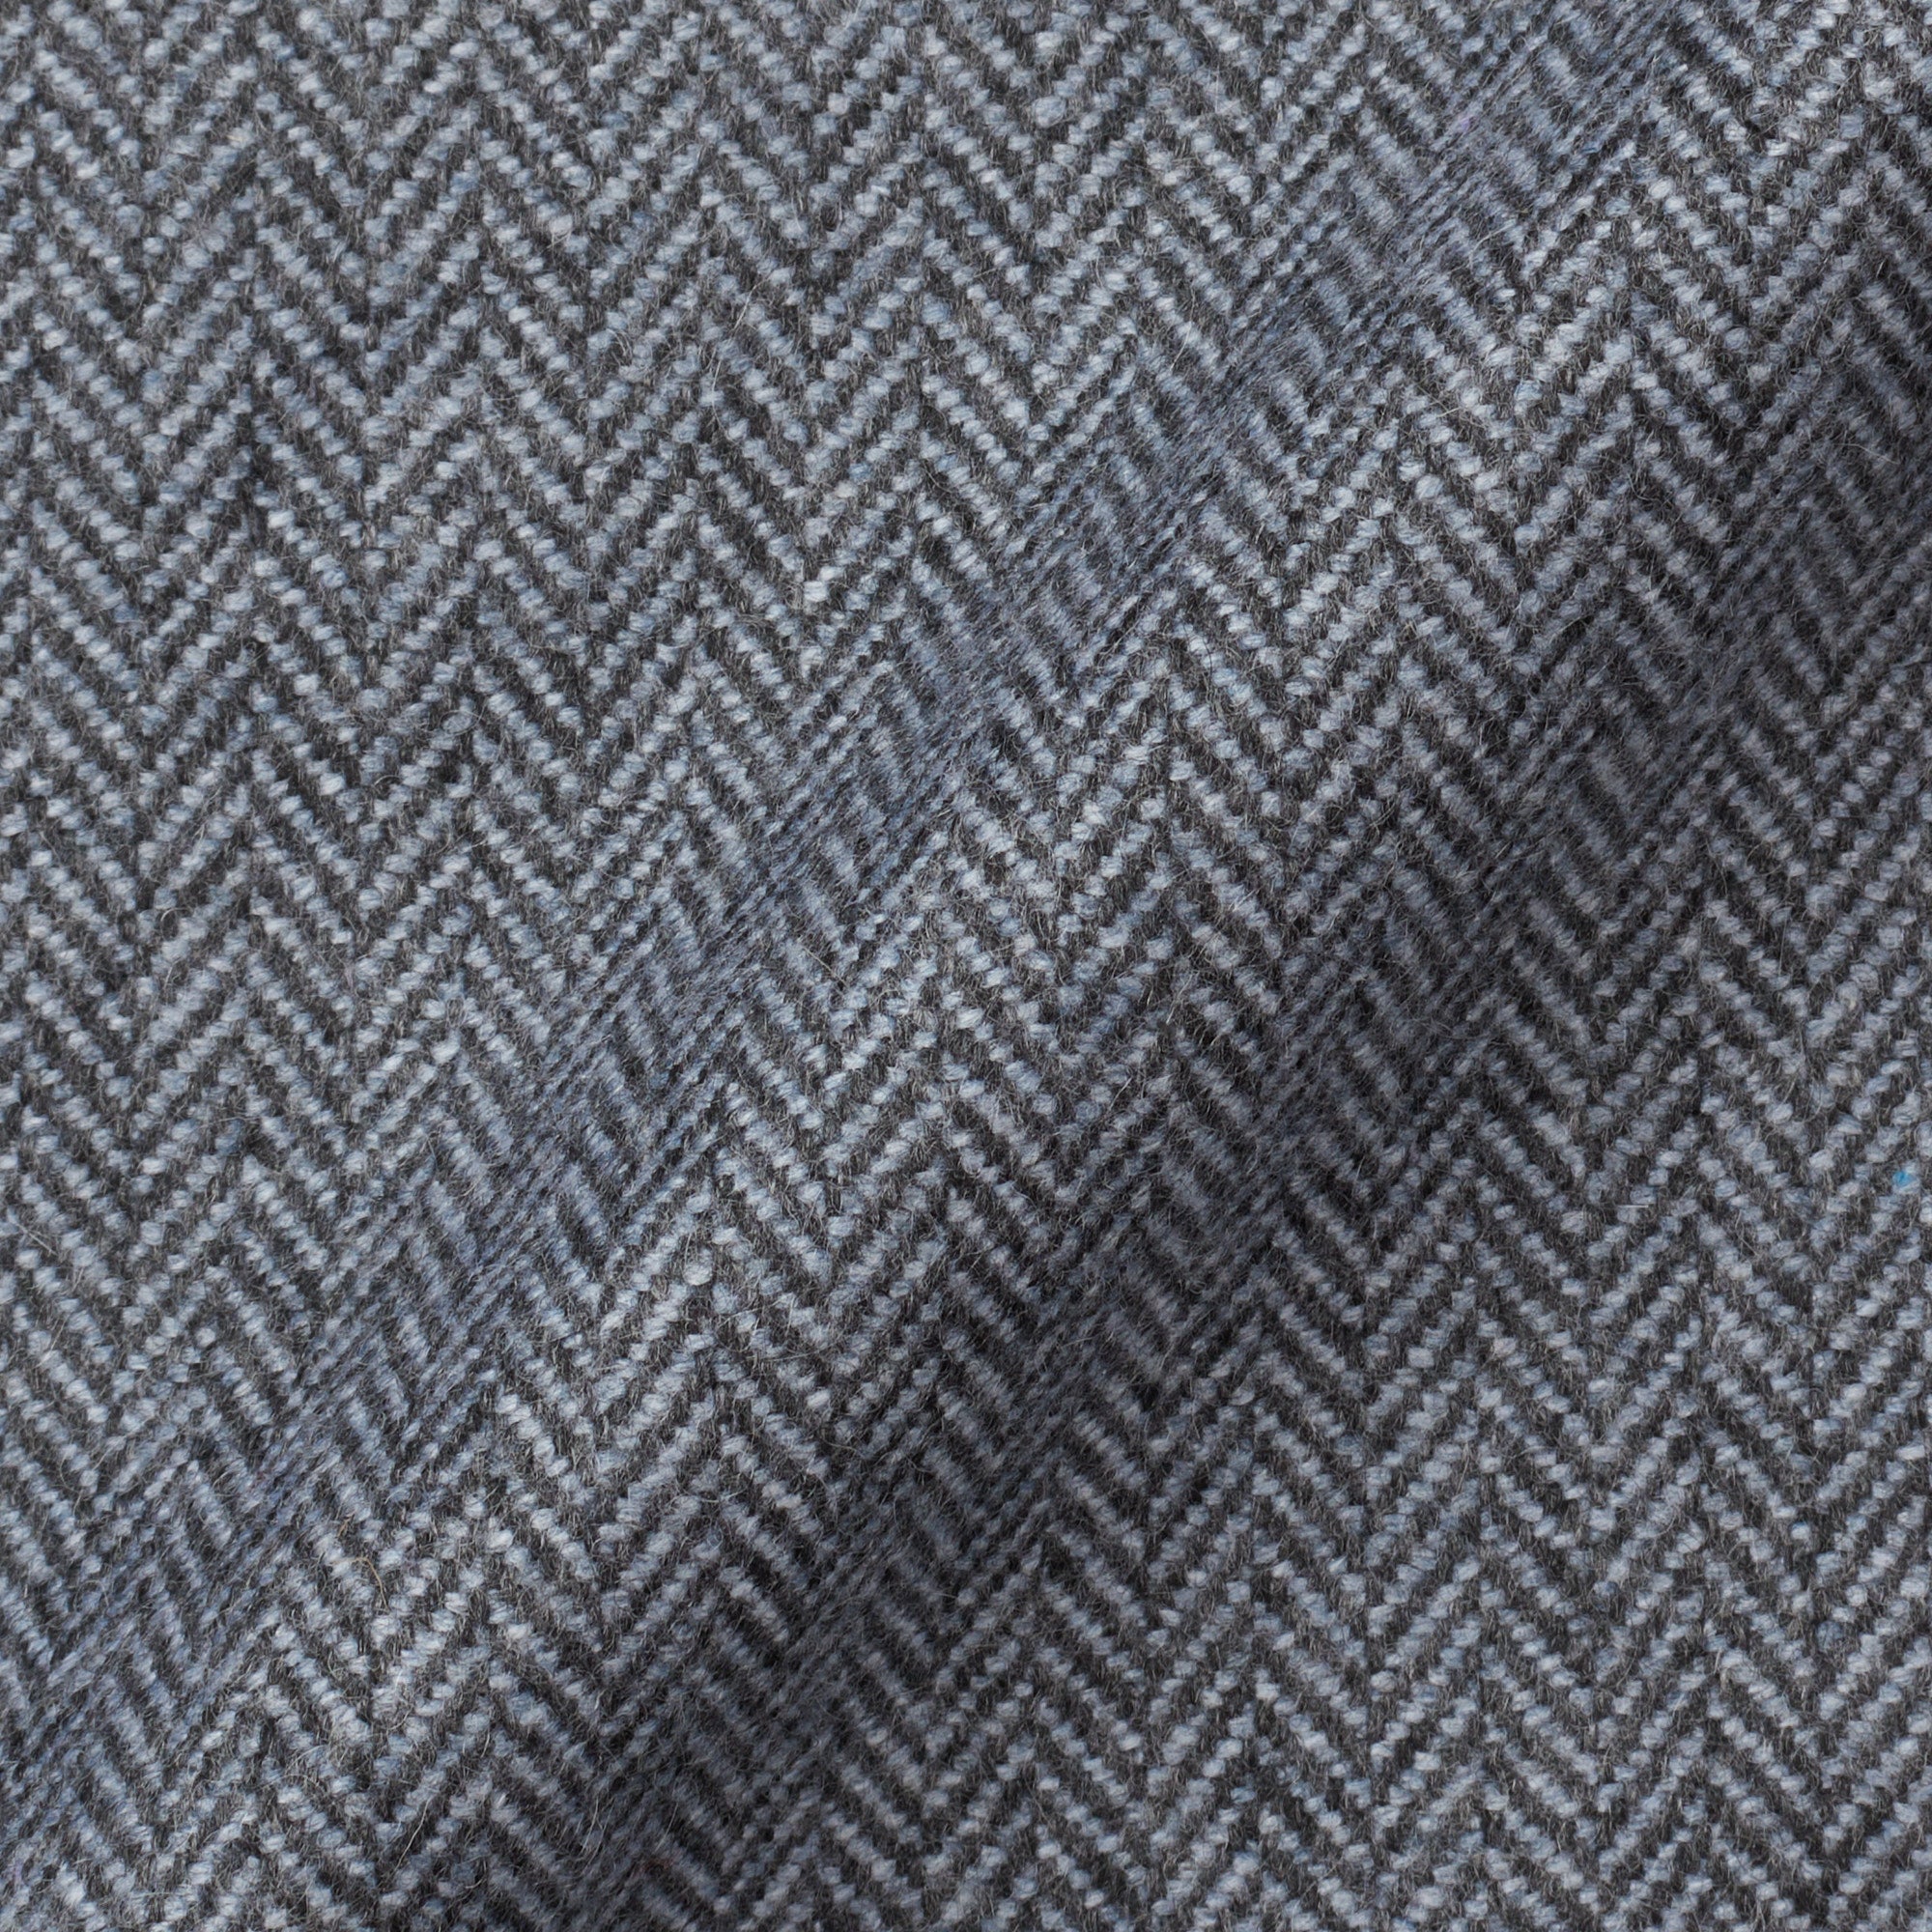 RUBINACCI LH Handmade Bespoke Gray Herringbone Cashmere Jacket EU 50 NEW US 40 RUBINACCI